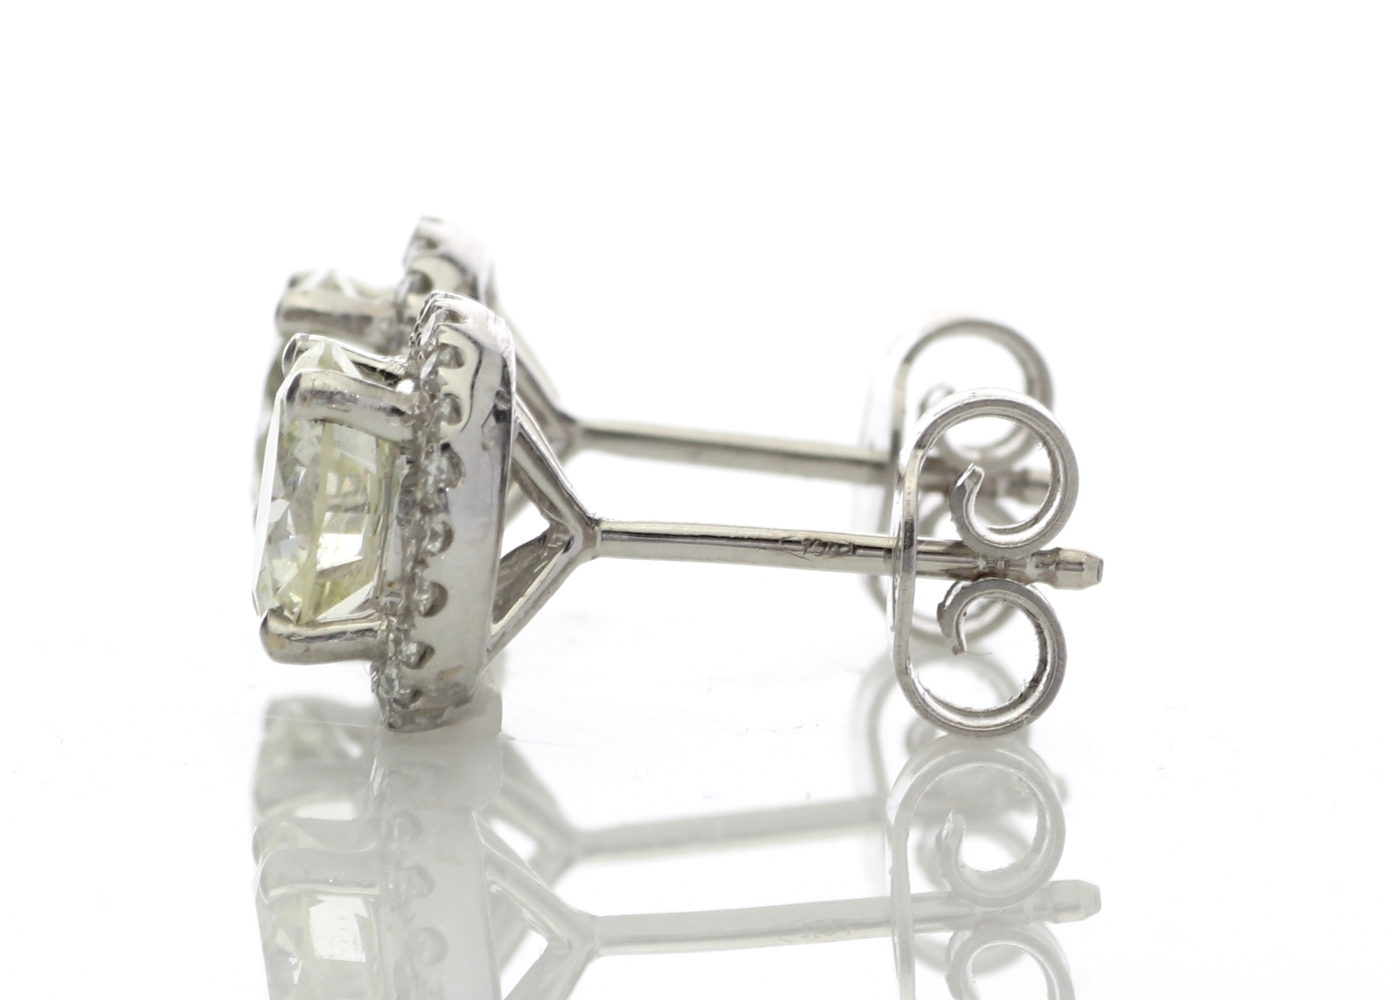 18ct White Gold Single Stone Halo Set Earrings (2.03) 2.26 Carats - Image 3 of 4